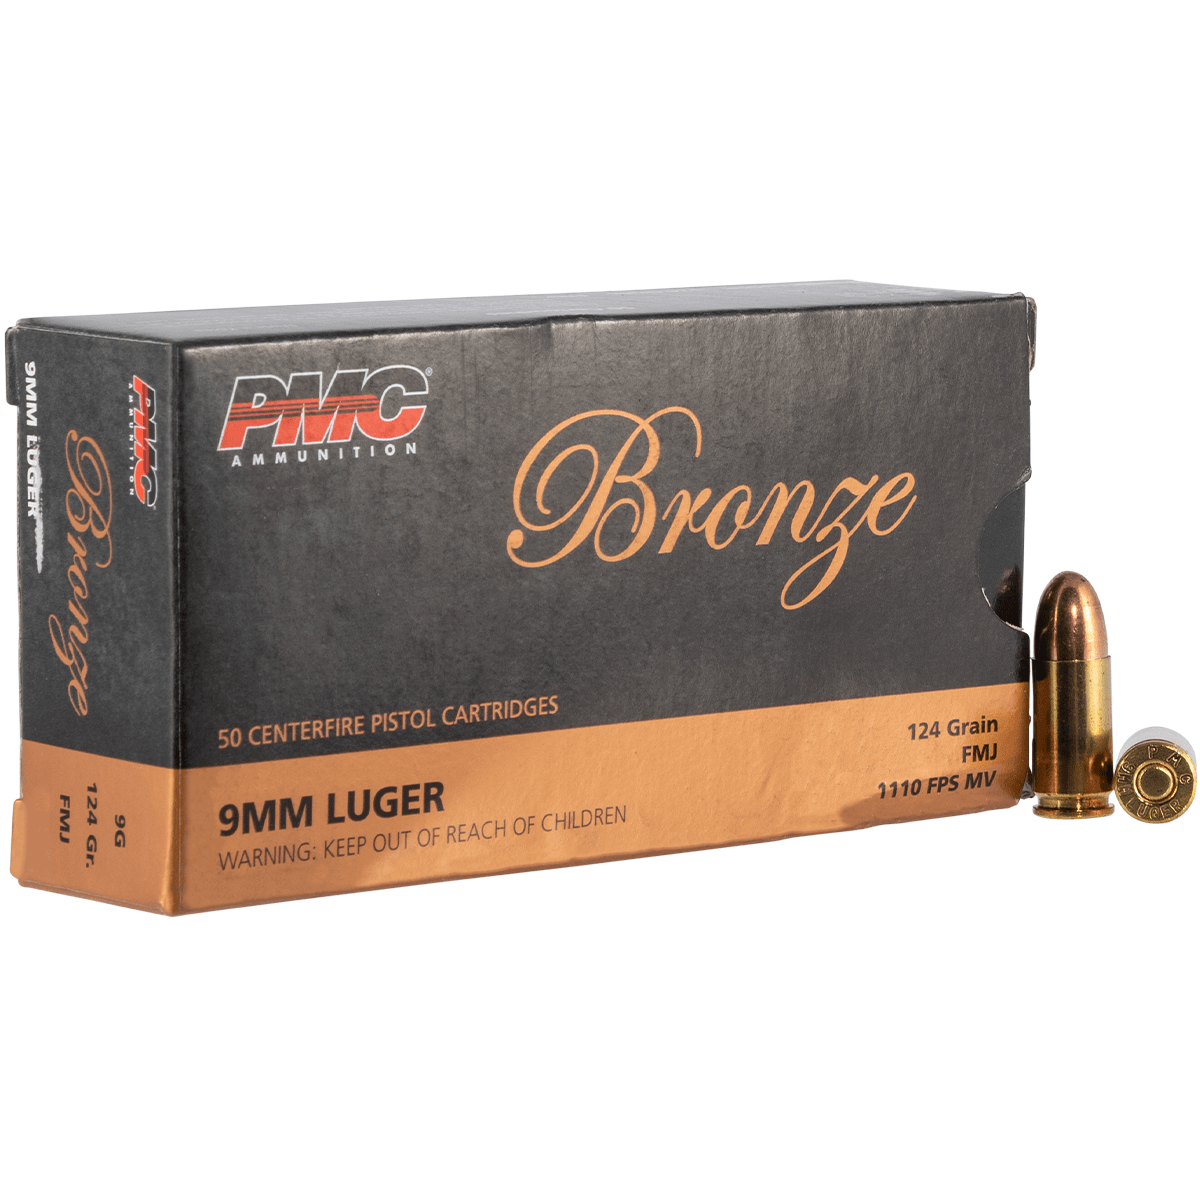 9mm Luger 124 Grain Total Metal Case Brass Cased Centerfire Pistol